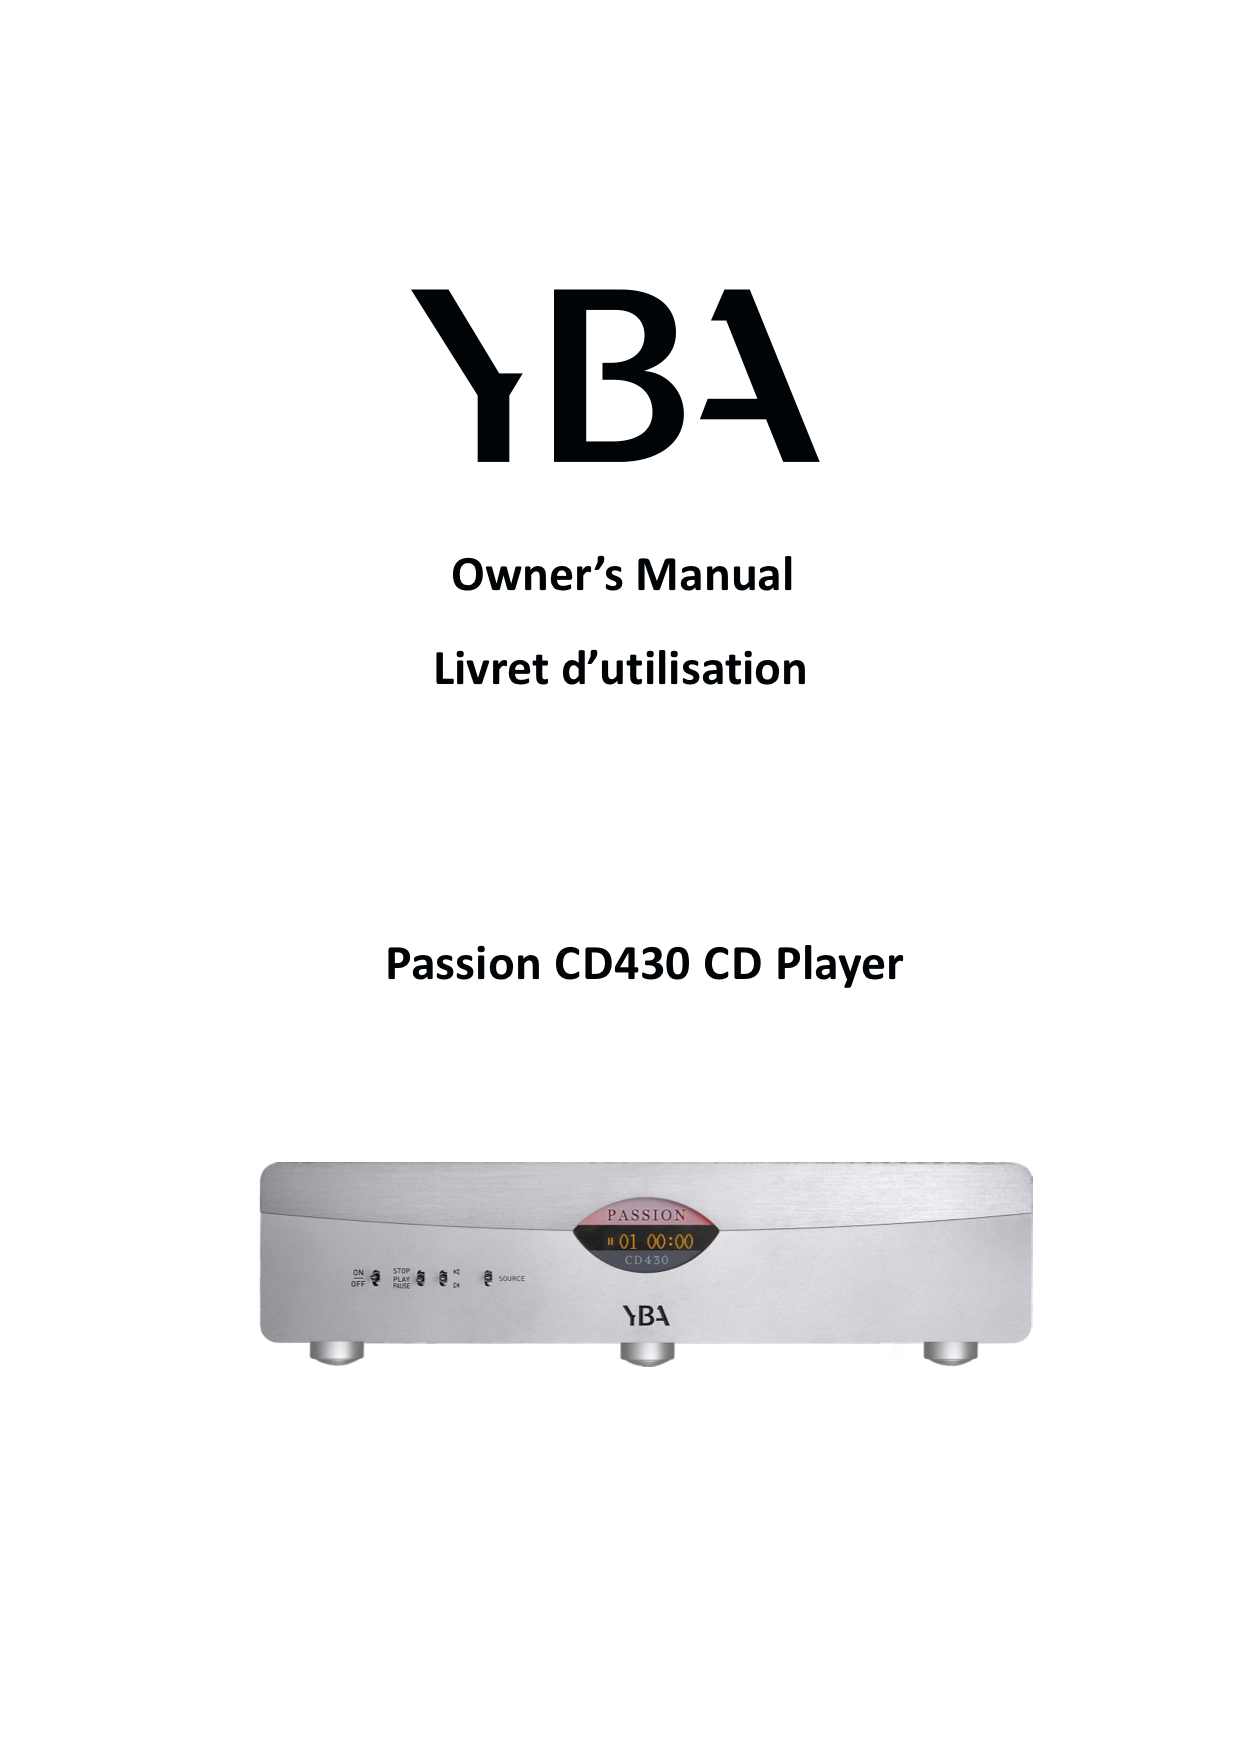 YBA Passion CD430 Owner Manual - Norman Audio